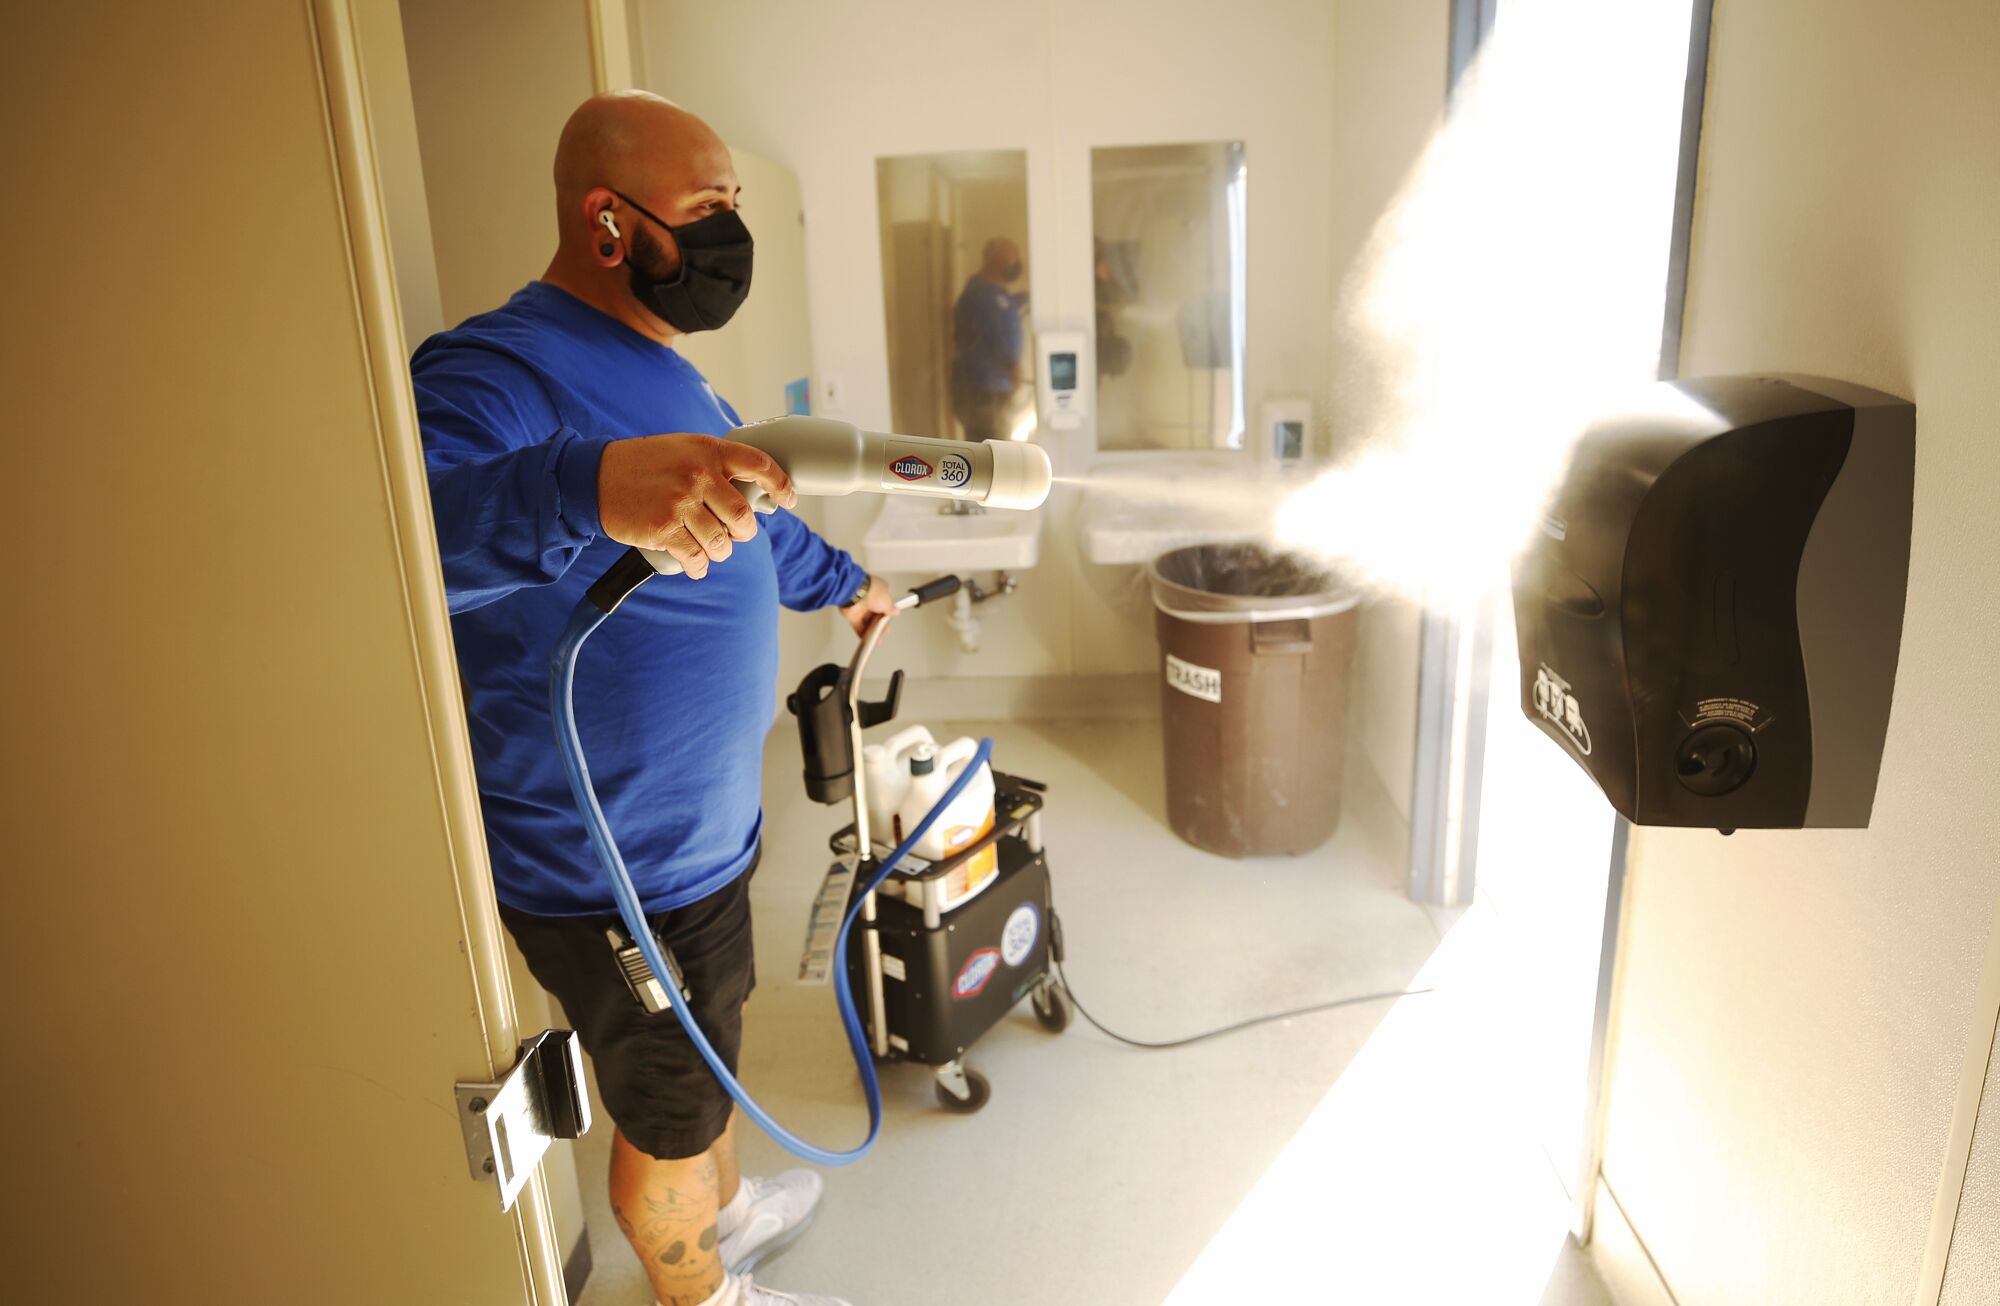 David Contreras uses a spray gun in a bathroom at the school.